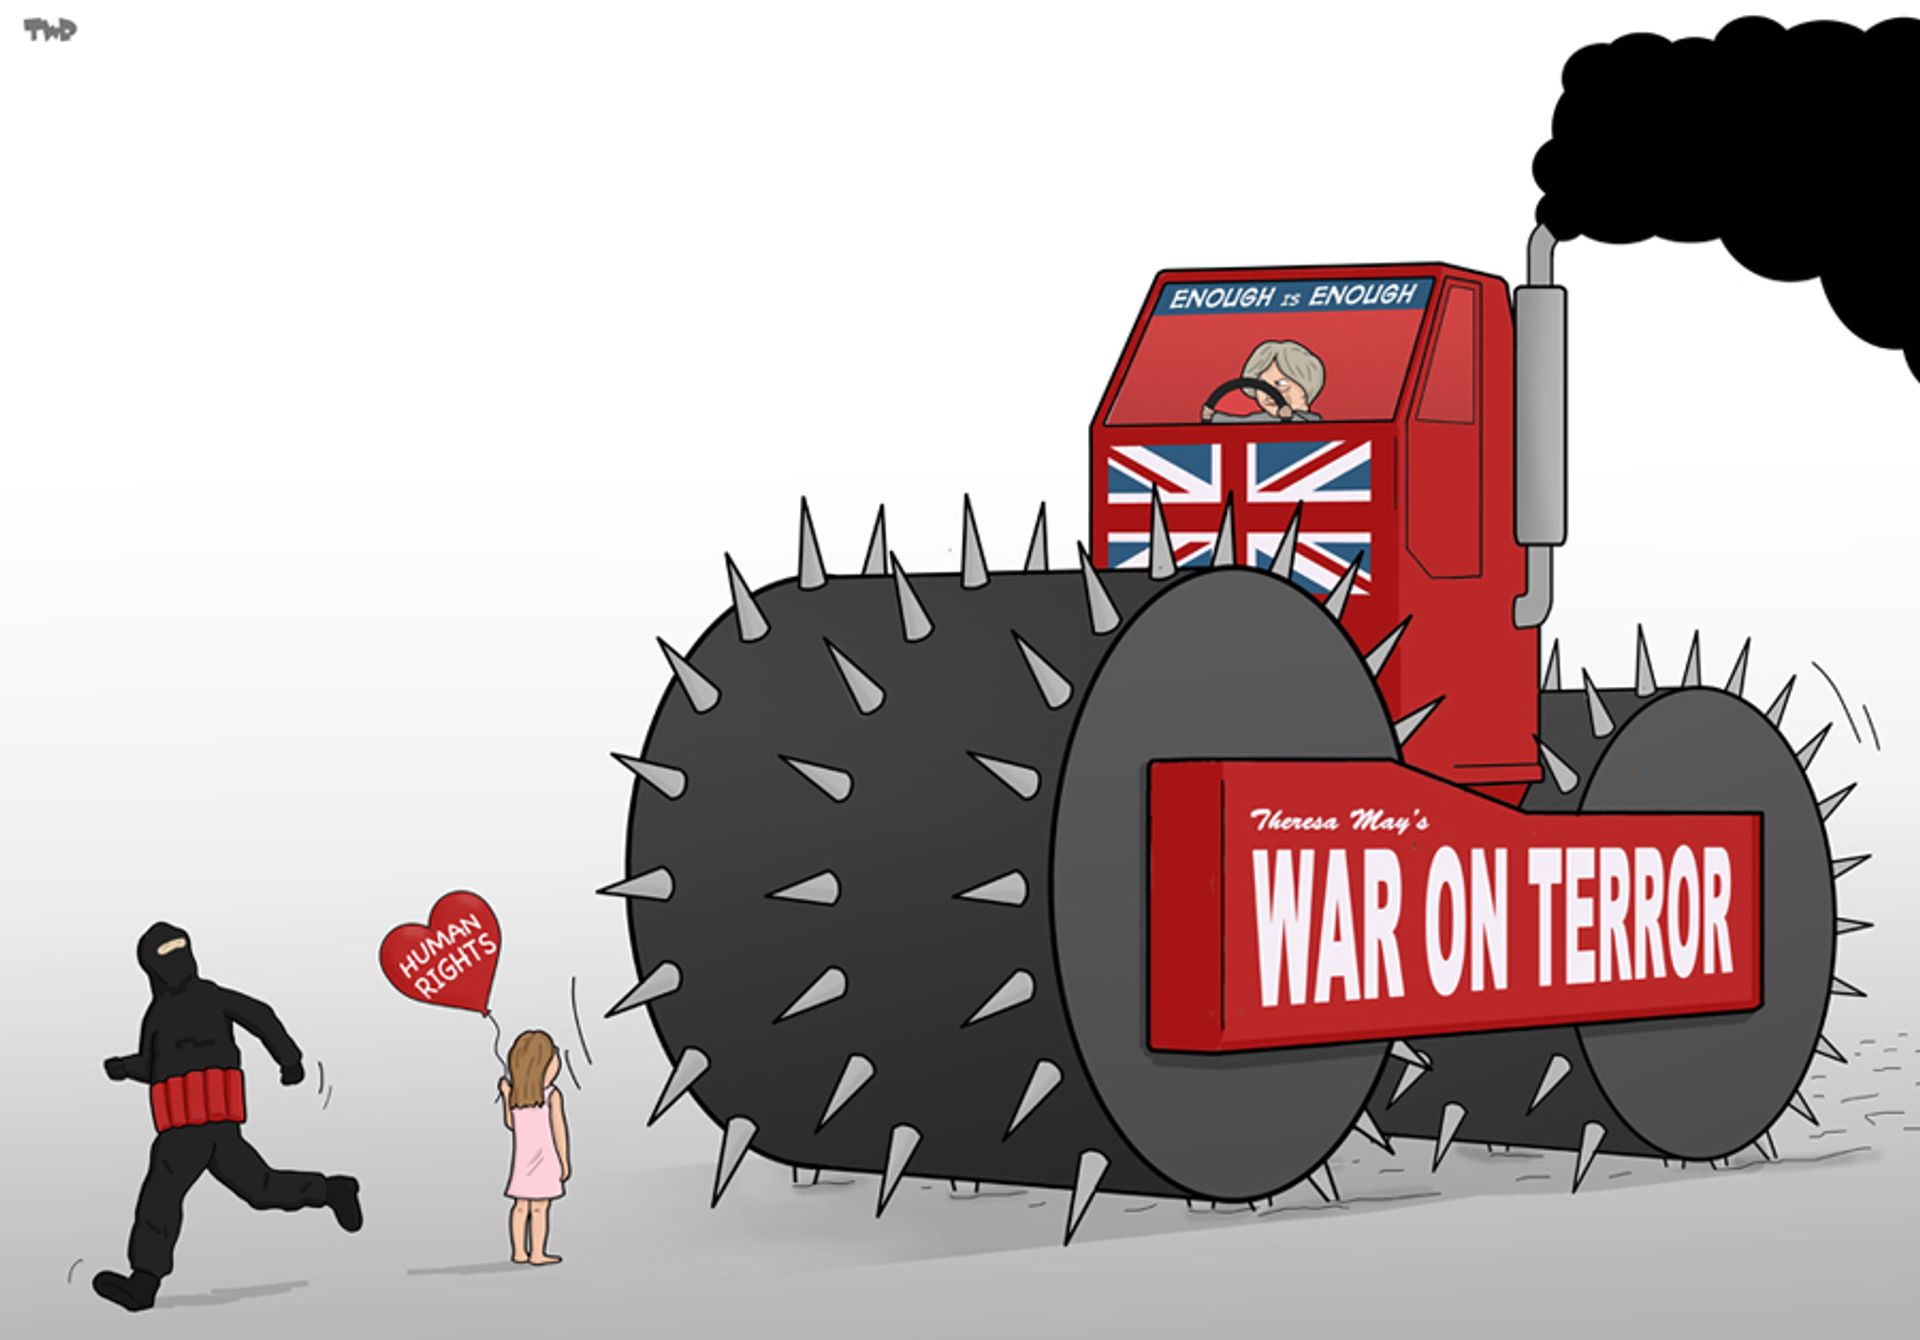 170607 UK- May vs terrorism